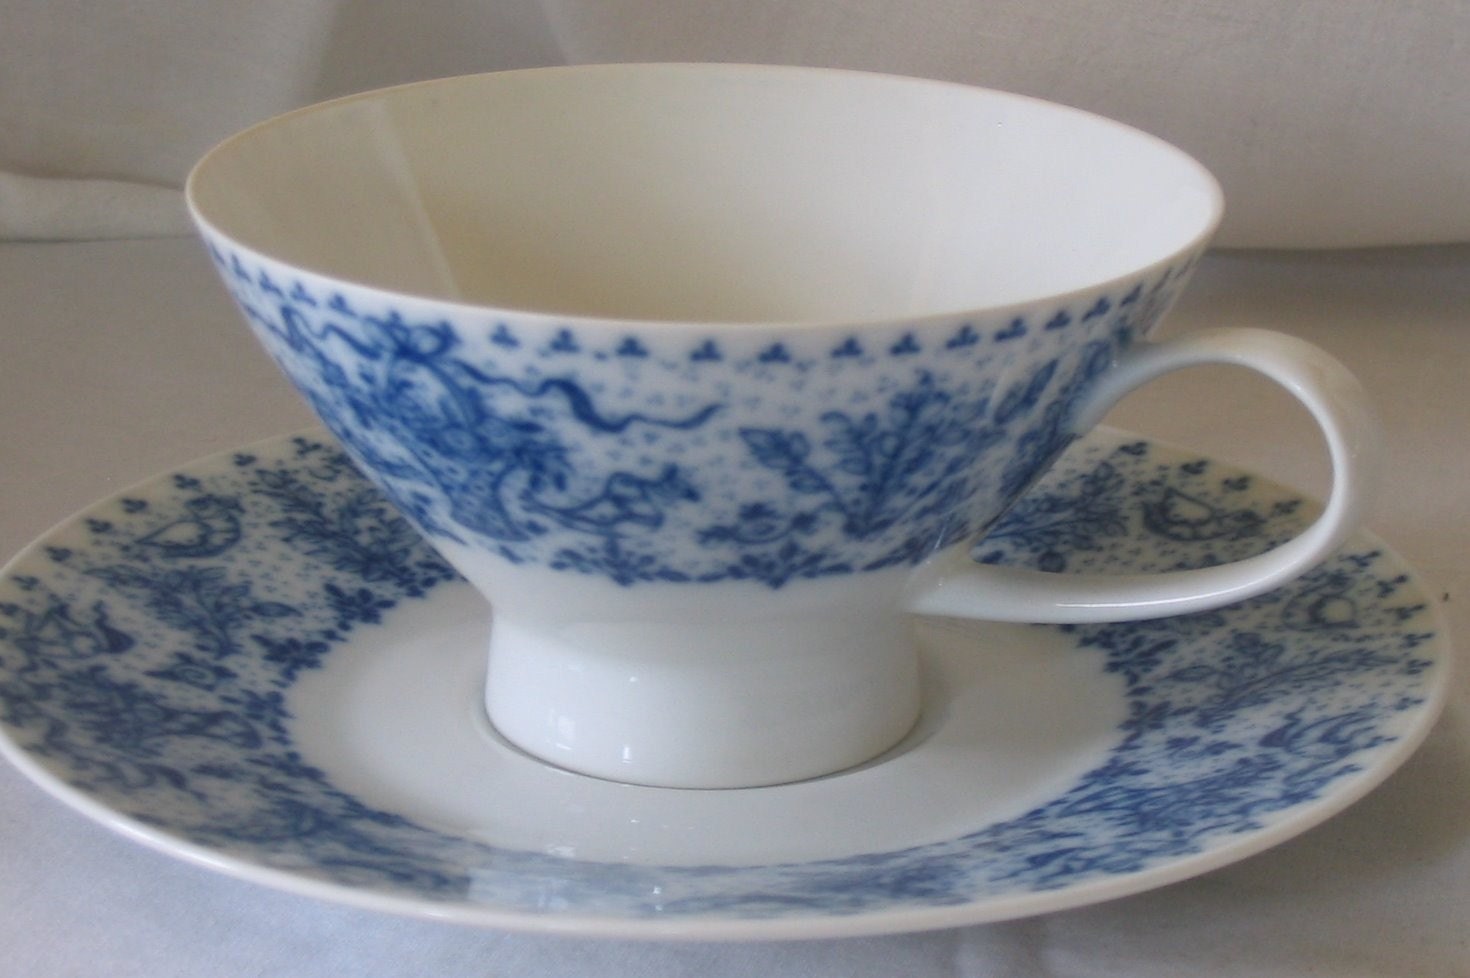 Rosenthal China TEA CUP Blue Birds teacup cup and saucer